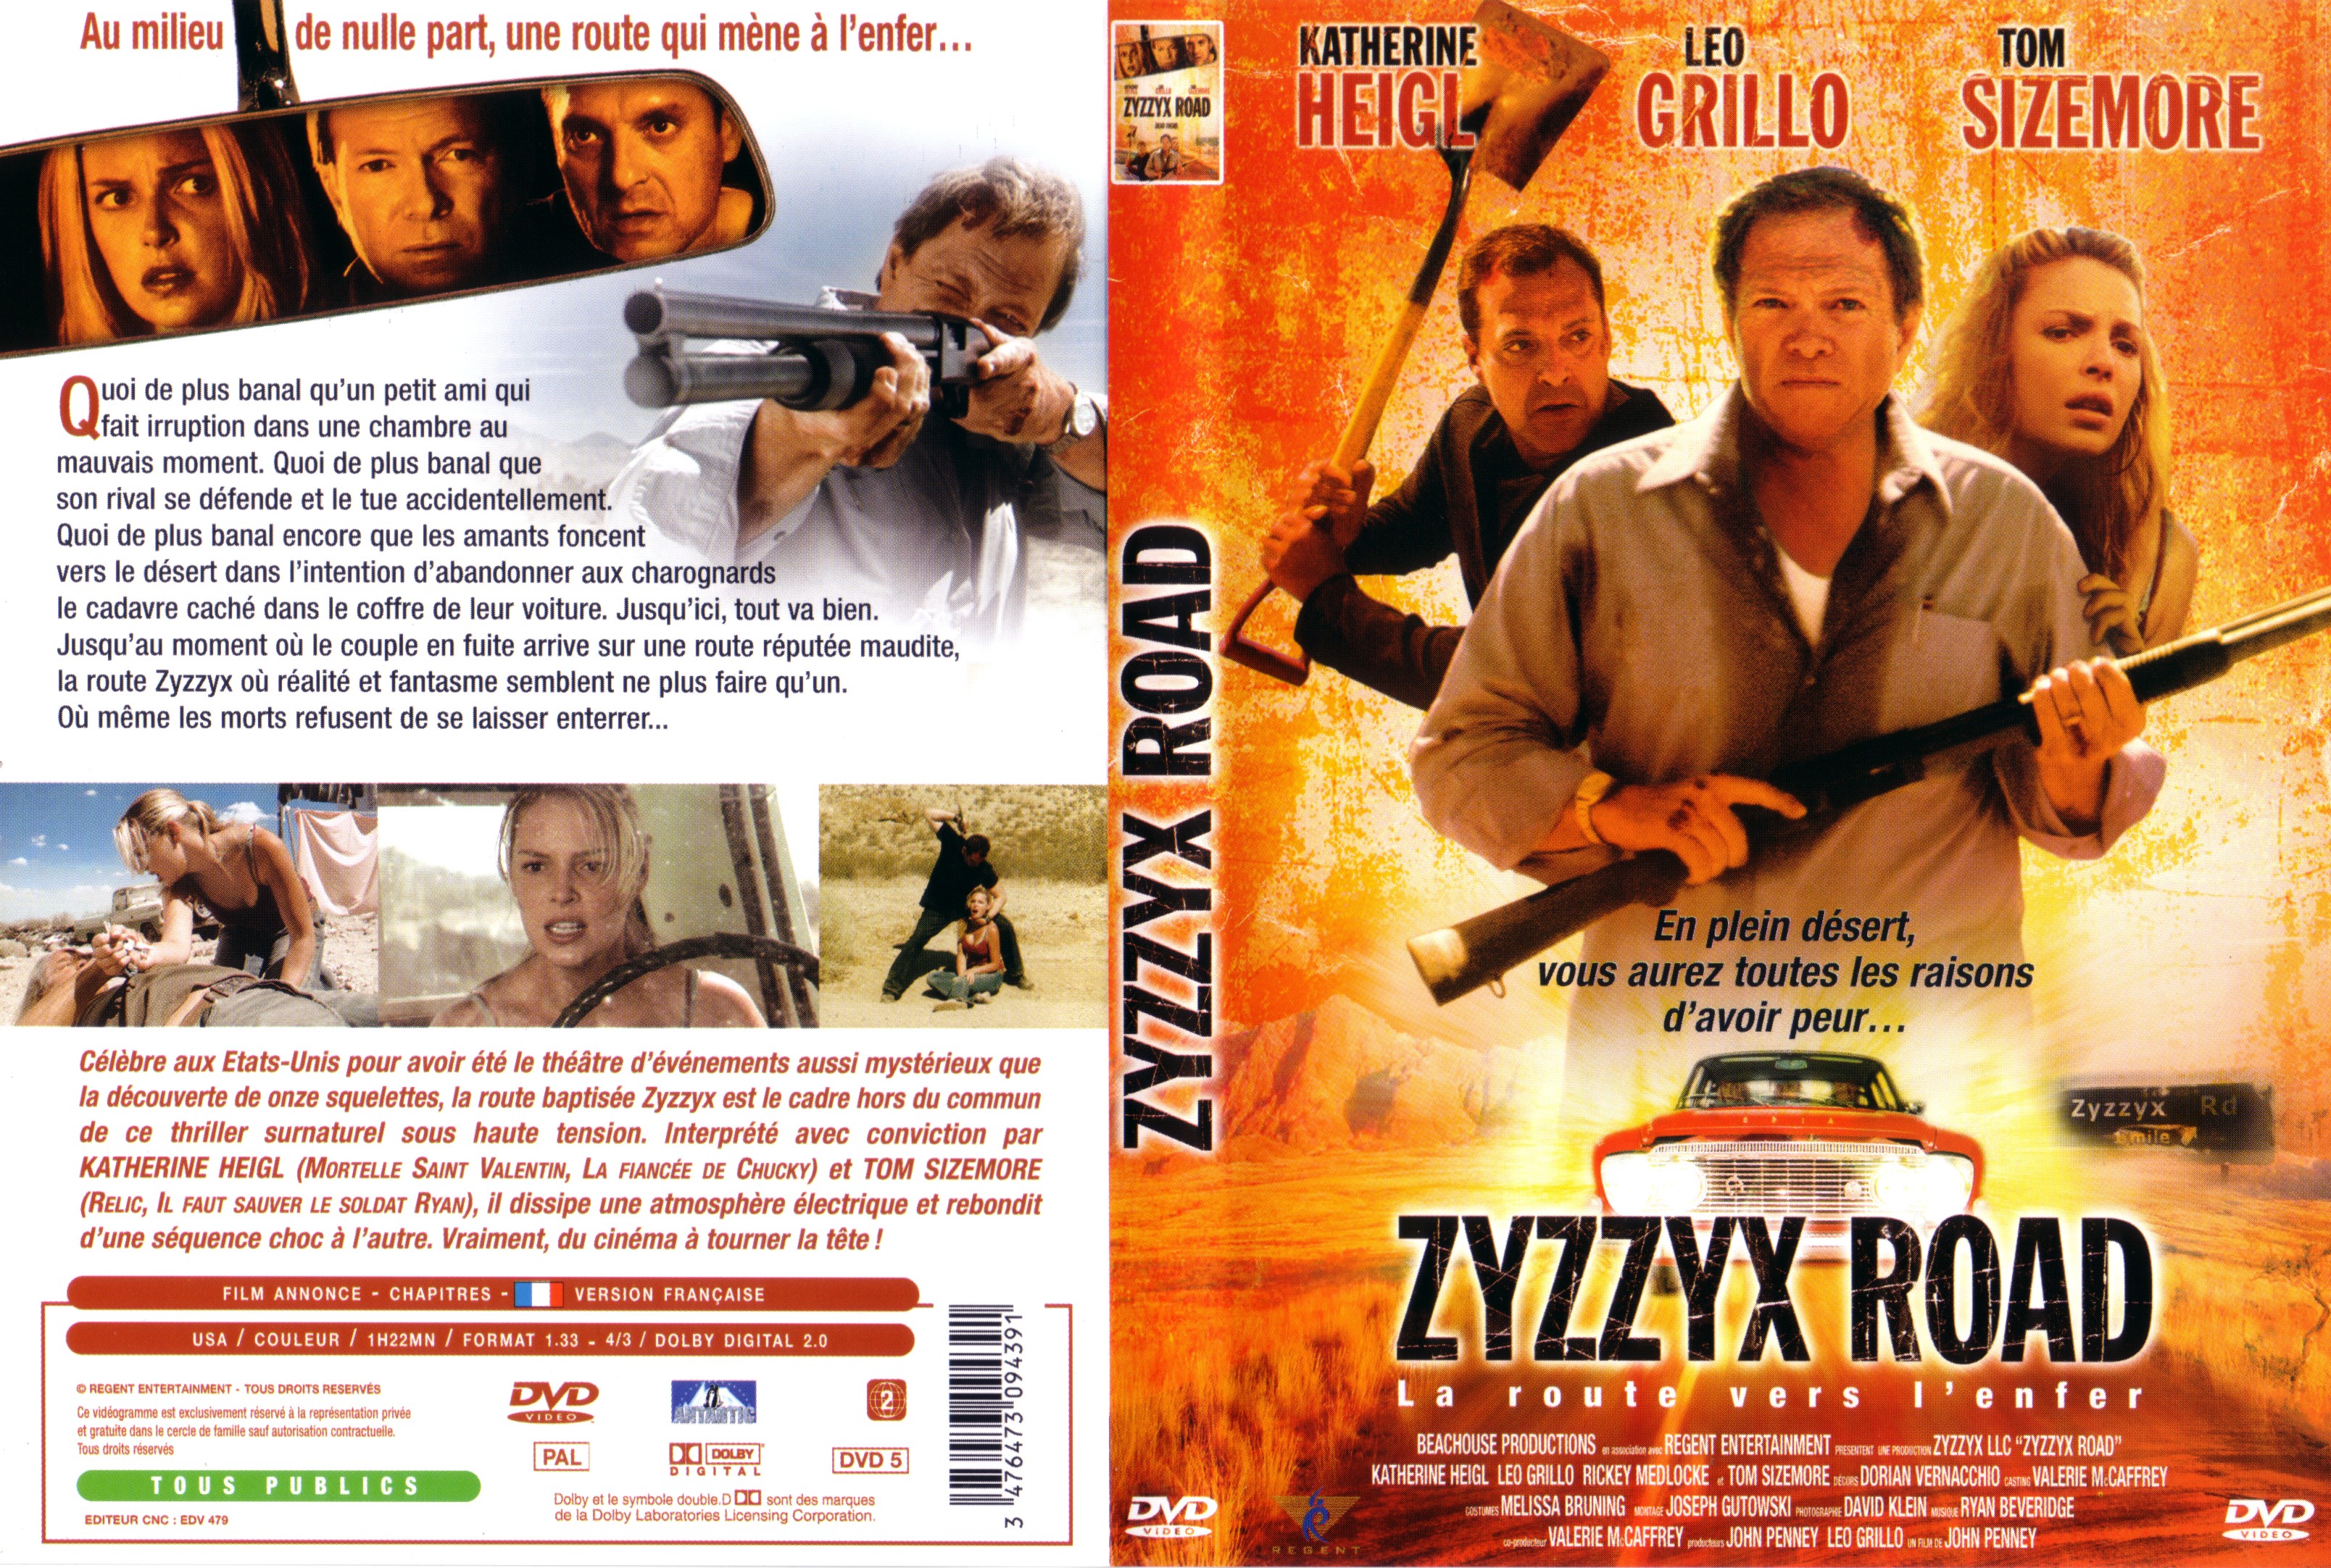 Jaquette DVD Zyzzyx road